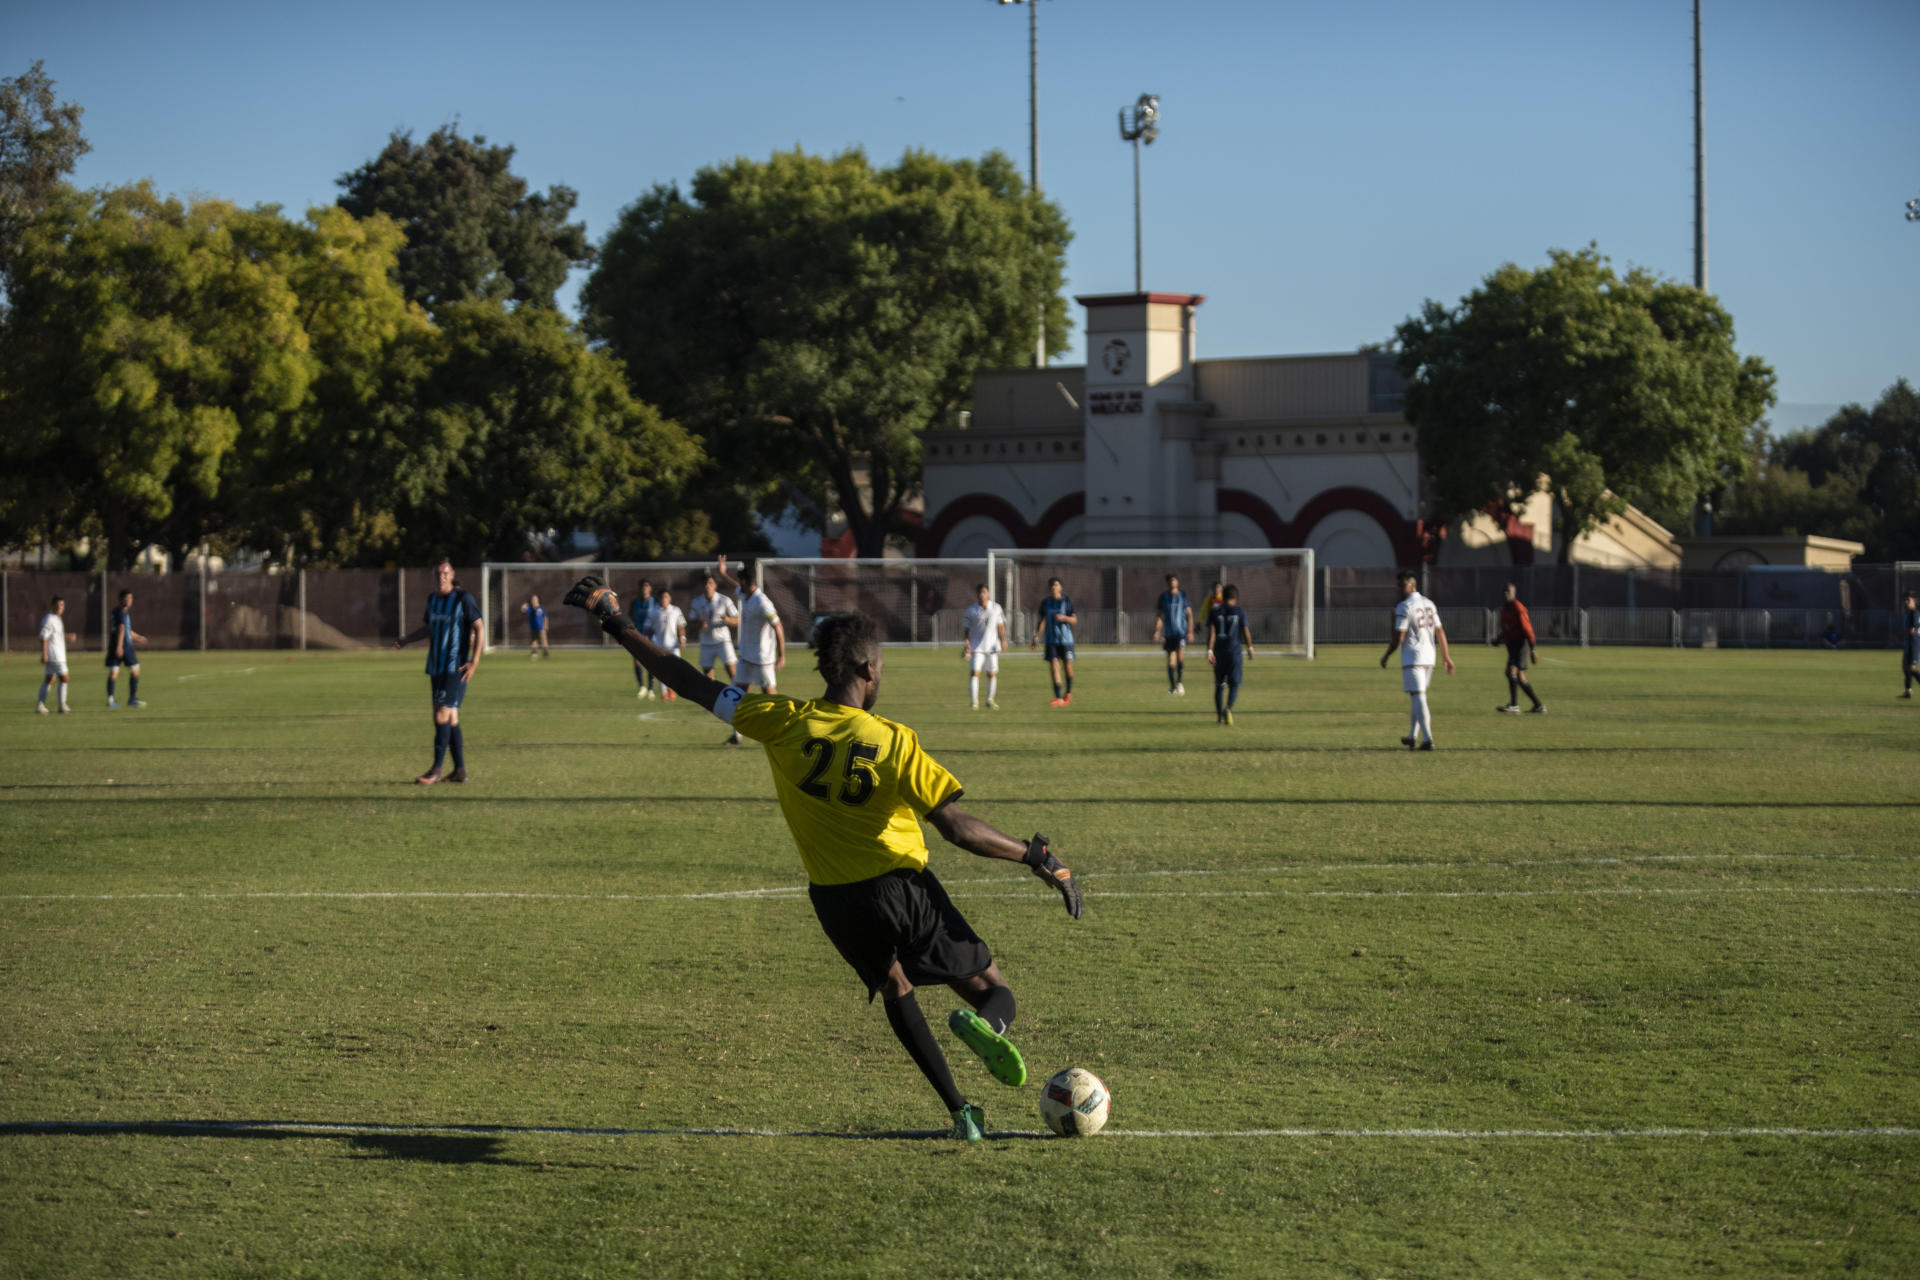 Chico State goalkeeper Damion Lewis sends a goal kick as his teammates await.